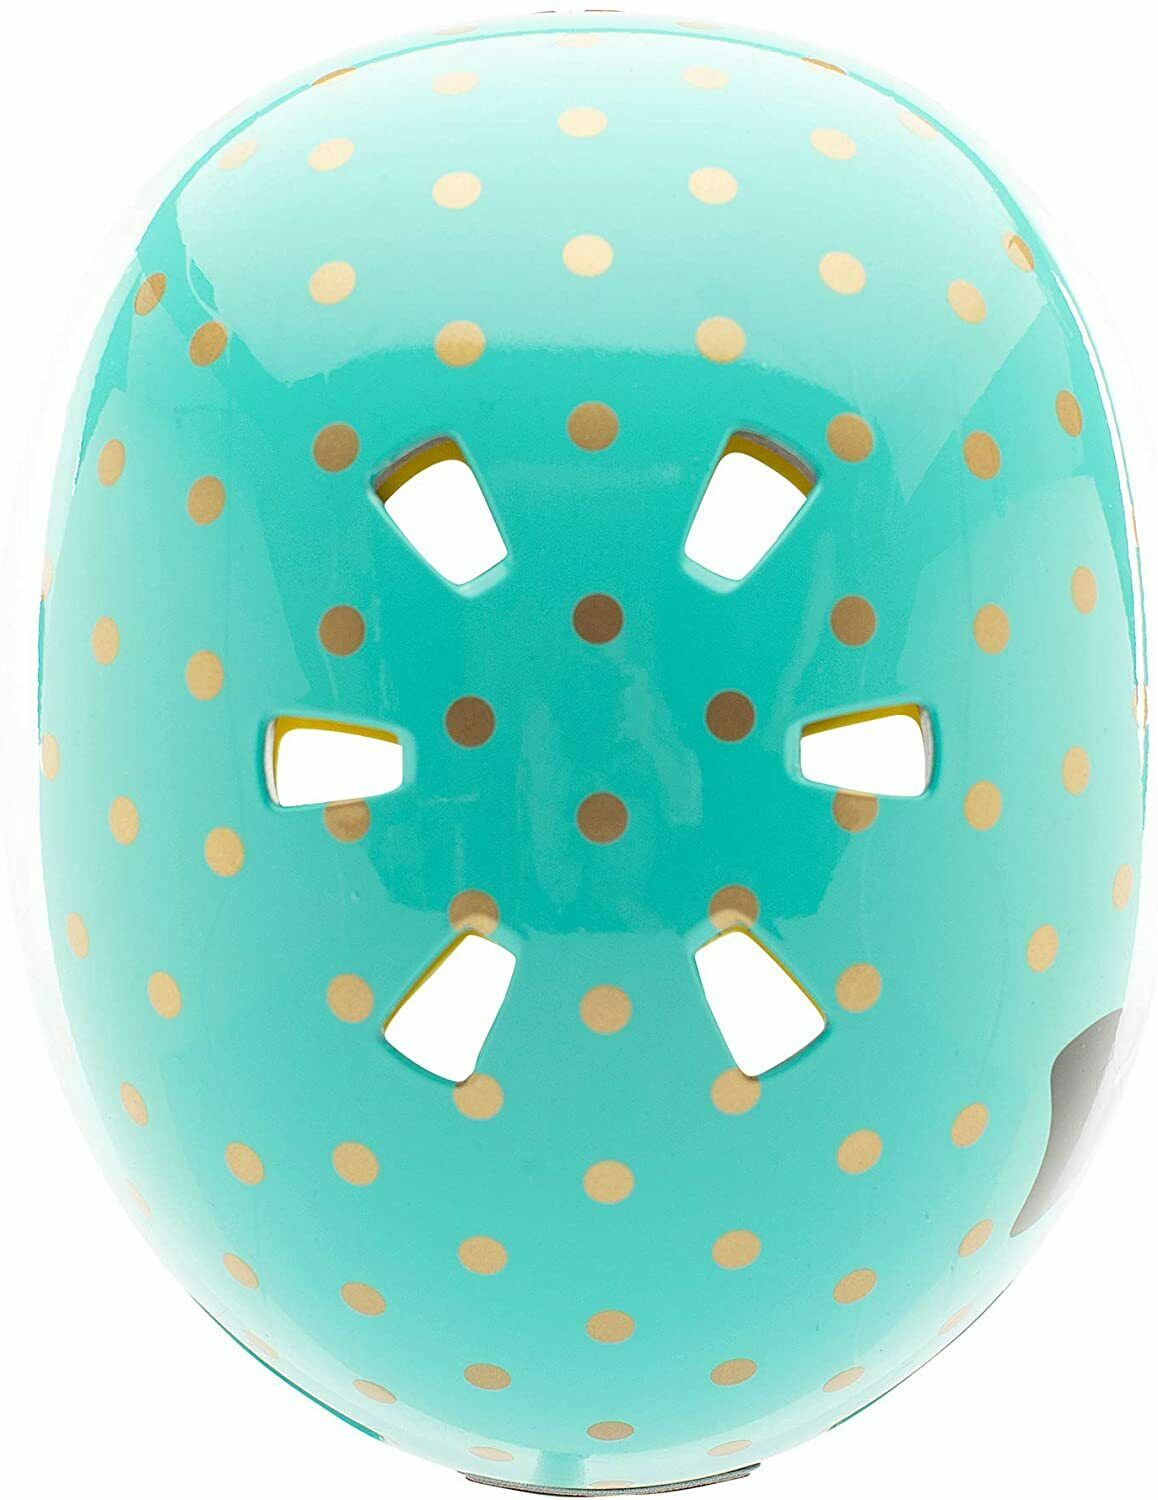 Nutcase Little Nutty Sock Hop Gloss MIPS Helmet, Toddler - ANB Baby -$50 - $75